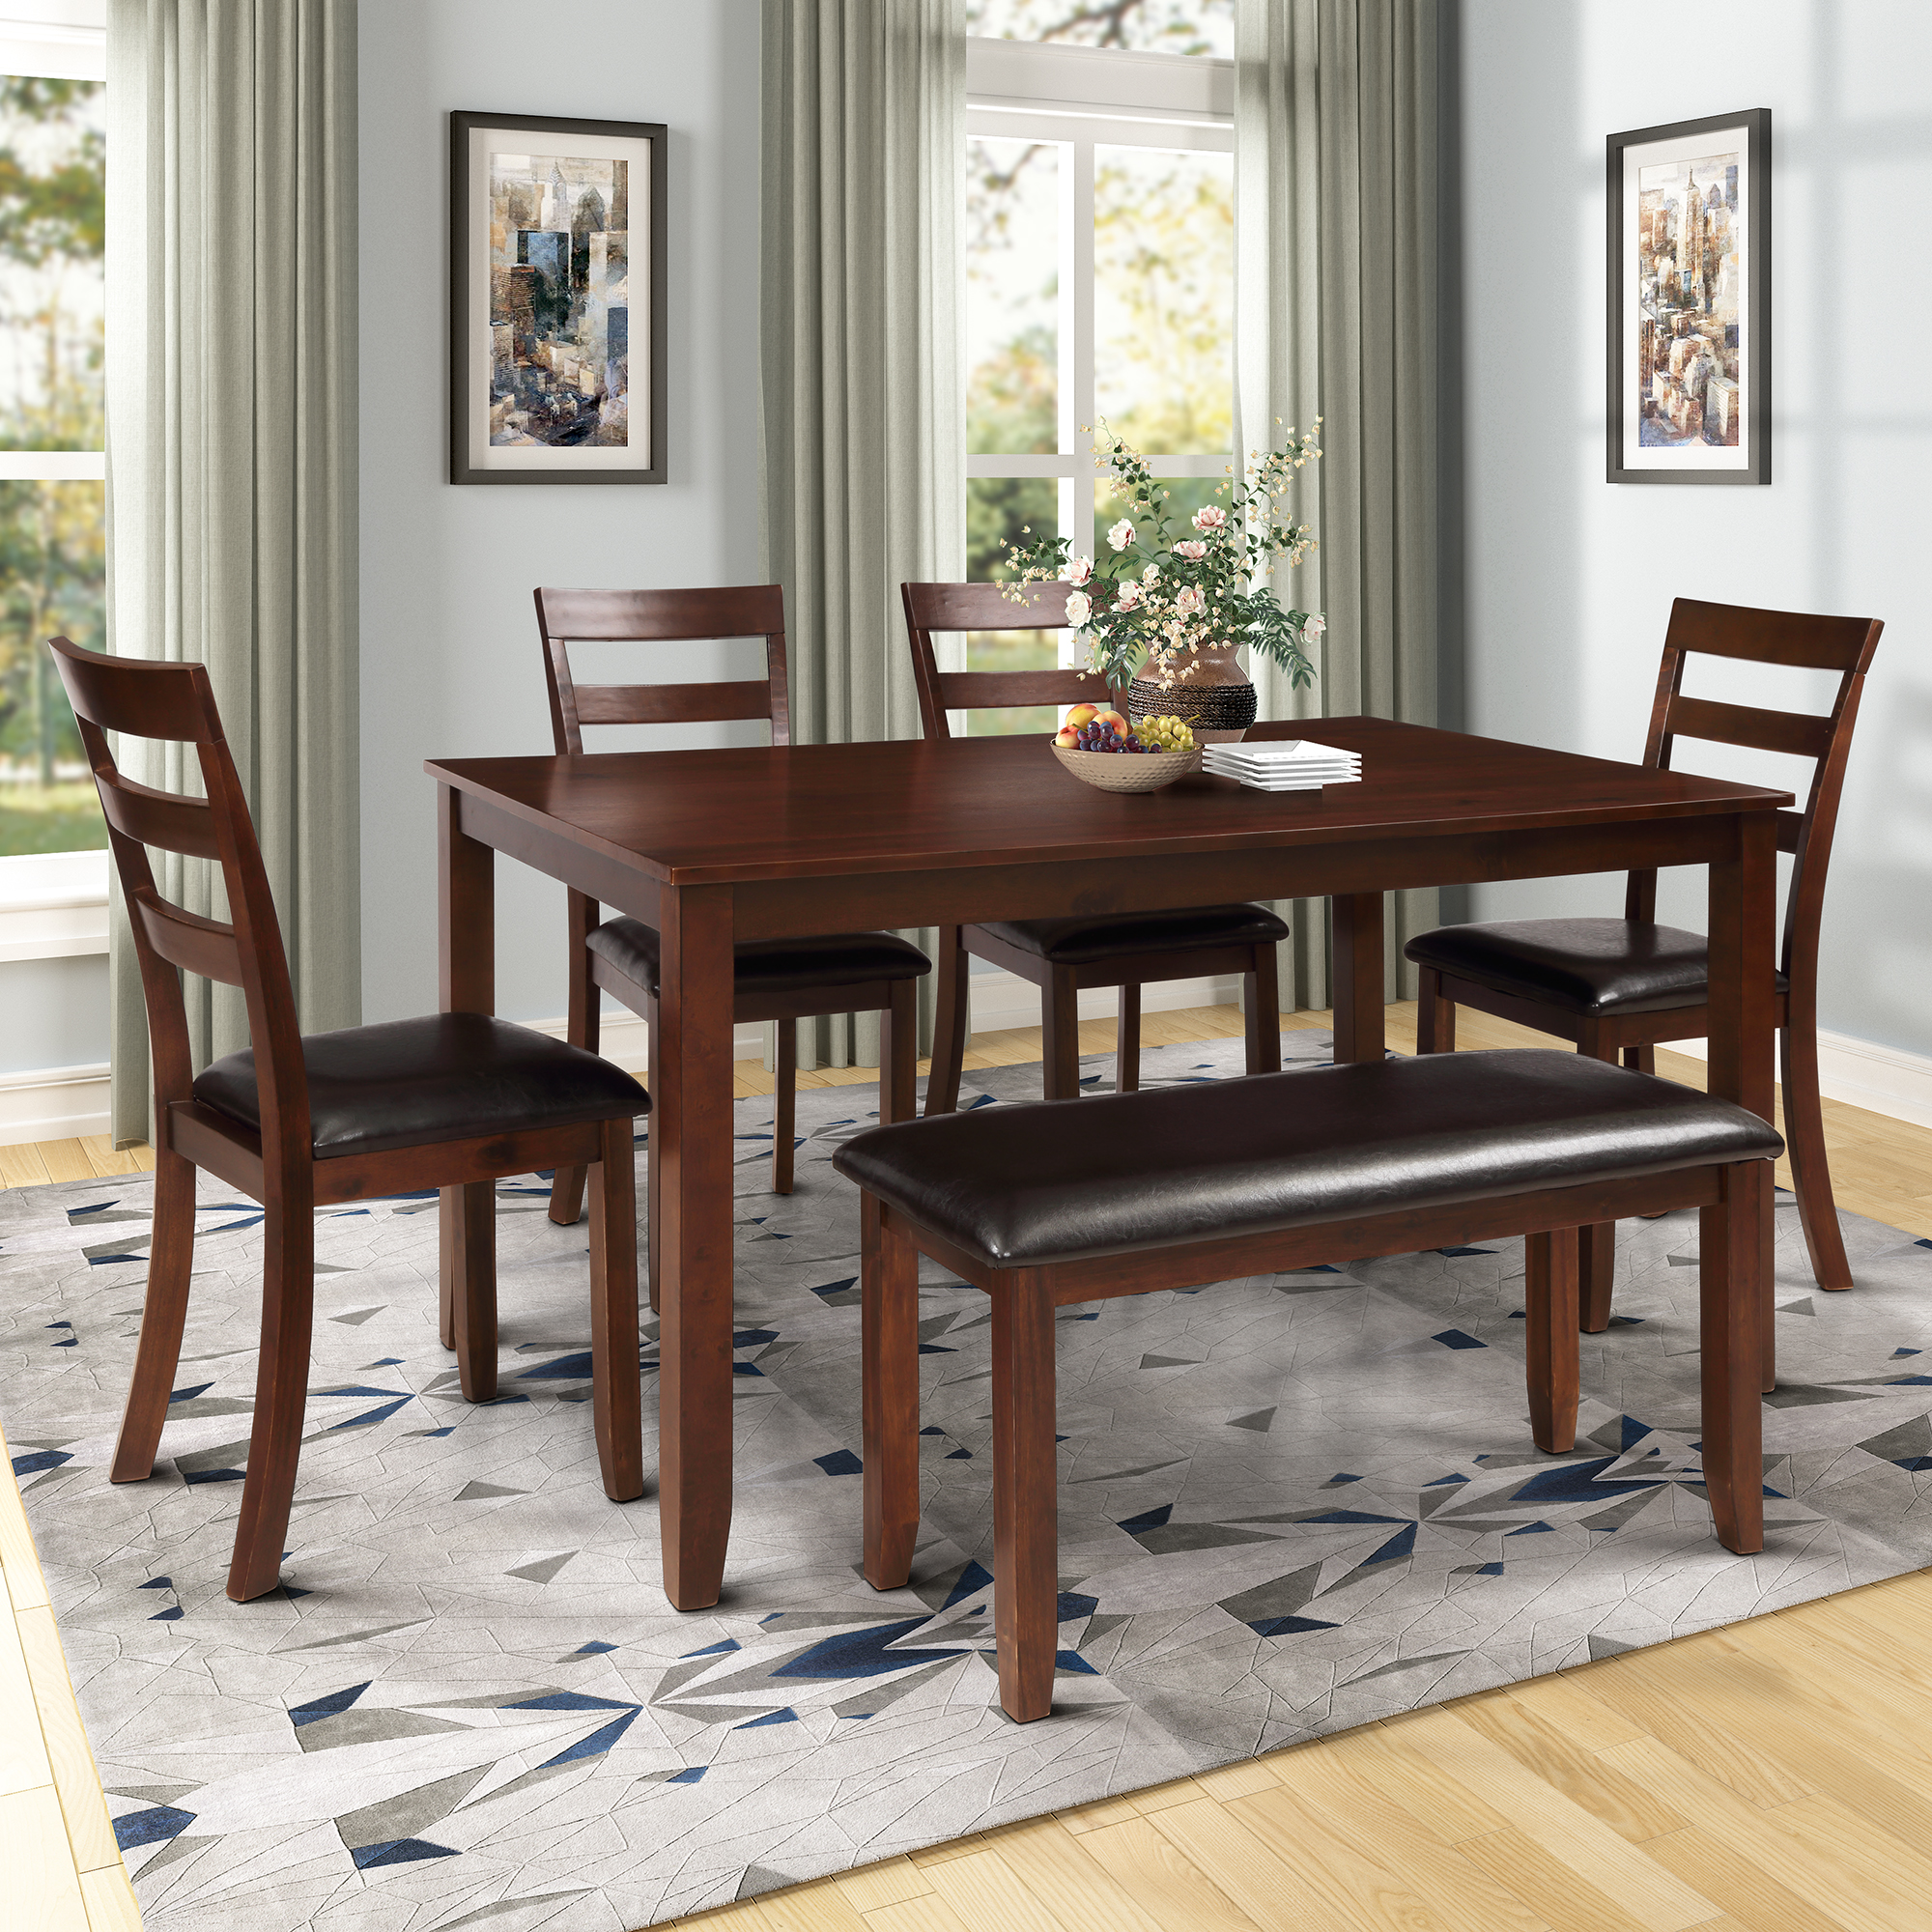 Harper&Bright Designs 6-piece Dining Room Table Set